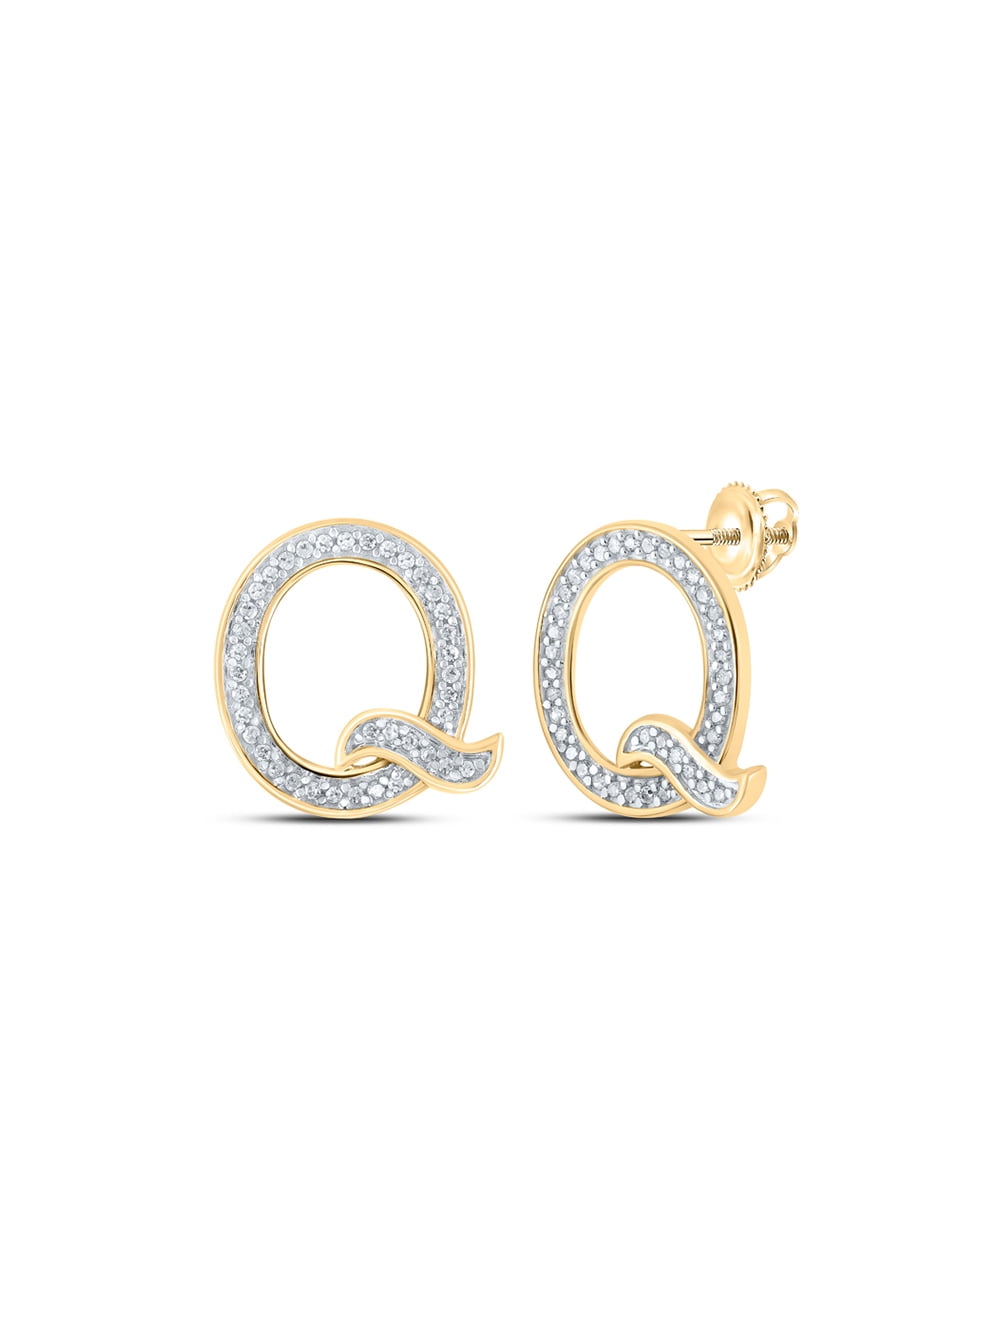 Diamond Wish 10k Gold Round Diamond Stud Earrings Bezel Set 1/6cttw, White, SI2-I1 Push-Back 